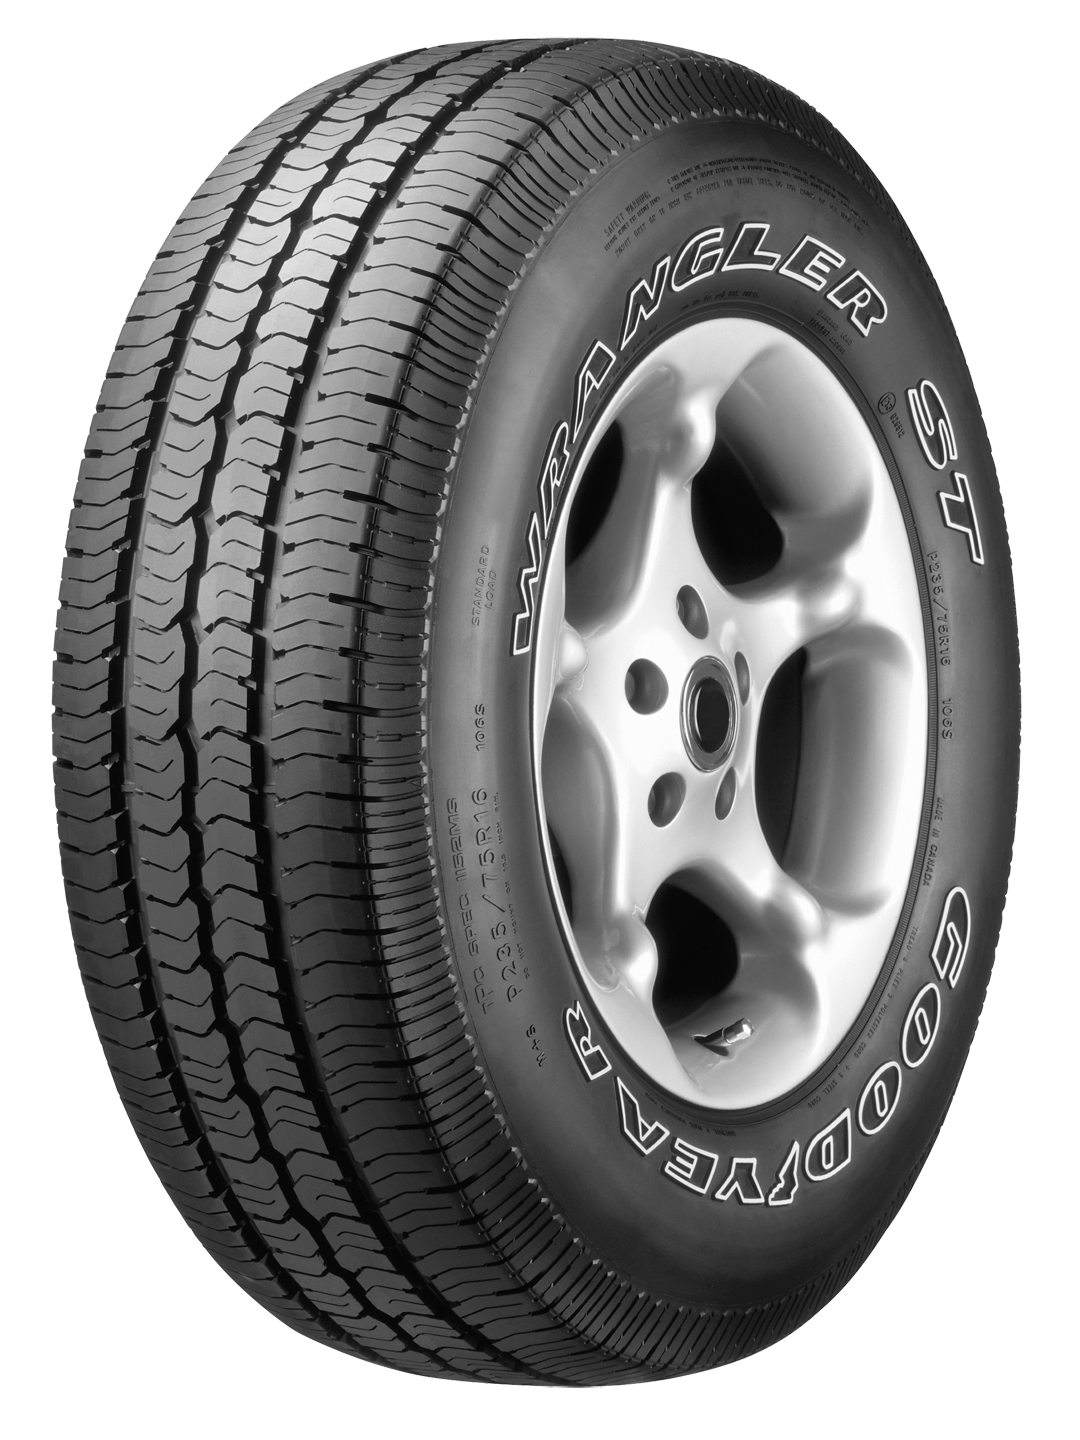 GOODYEAR WRANGLER ST(P) P235 / 75 R 16 - Appalacian Tire Products & Service  Appalacian Tire Products & Service